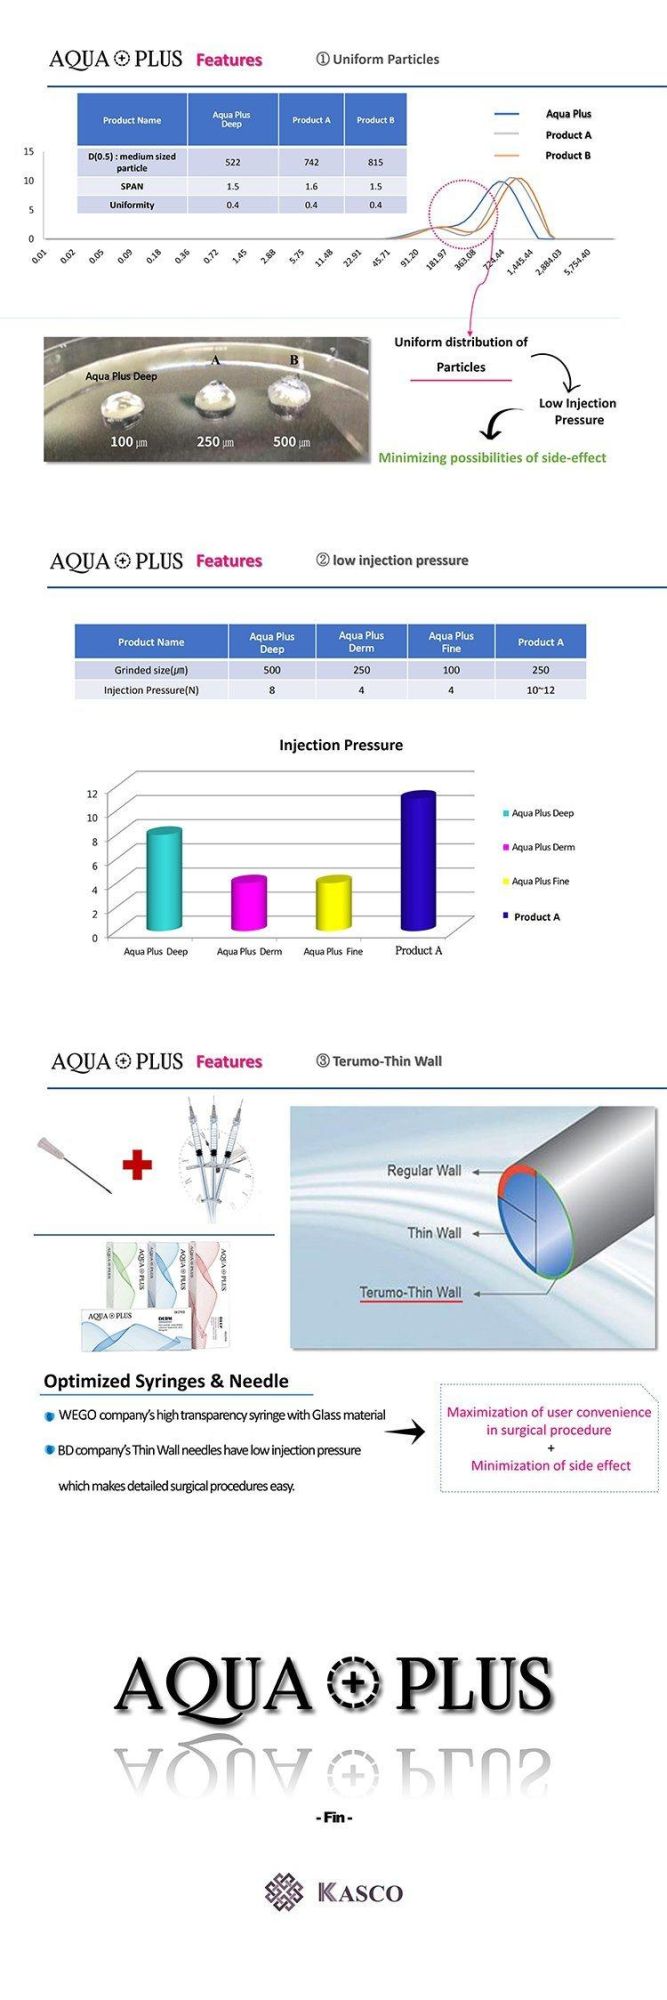 Aqua Plus Cross Linked Injectable Hyaluronic Acid Dermal Filler 2ml Injection for Cheek